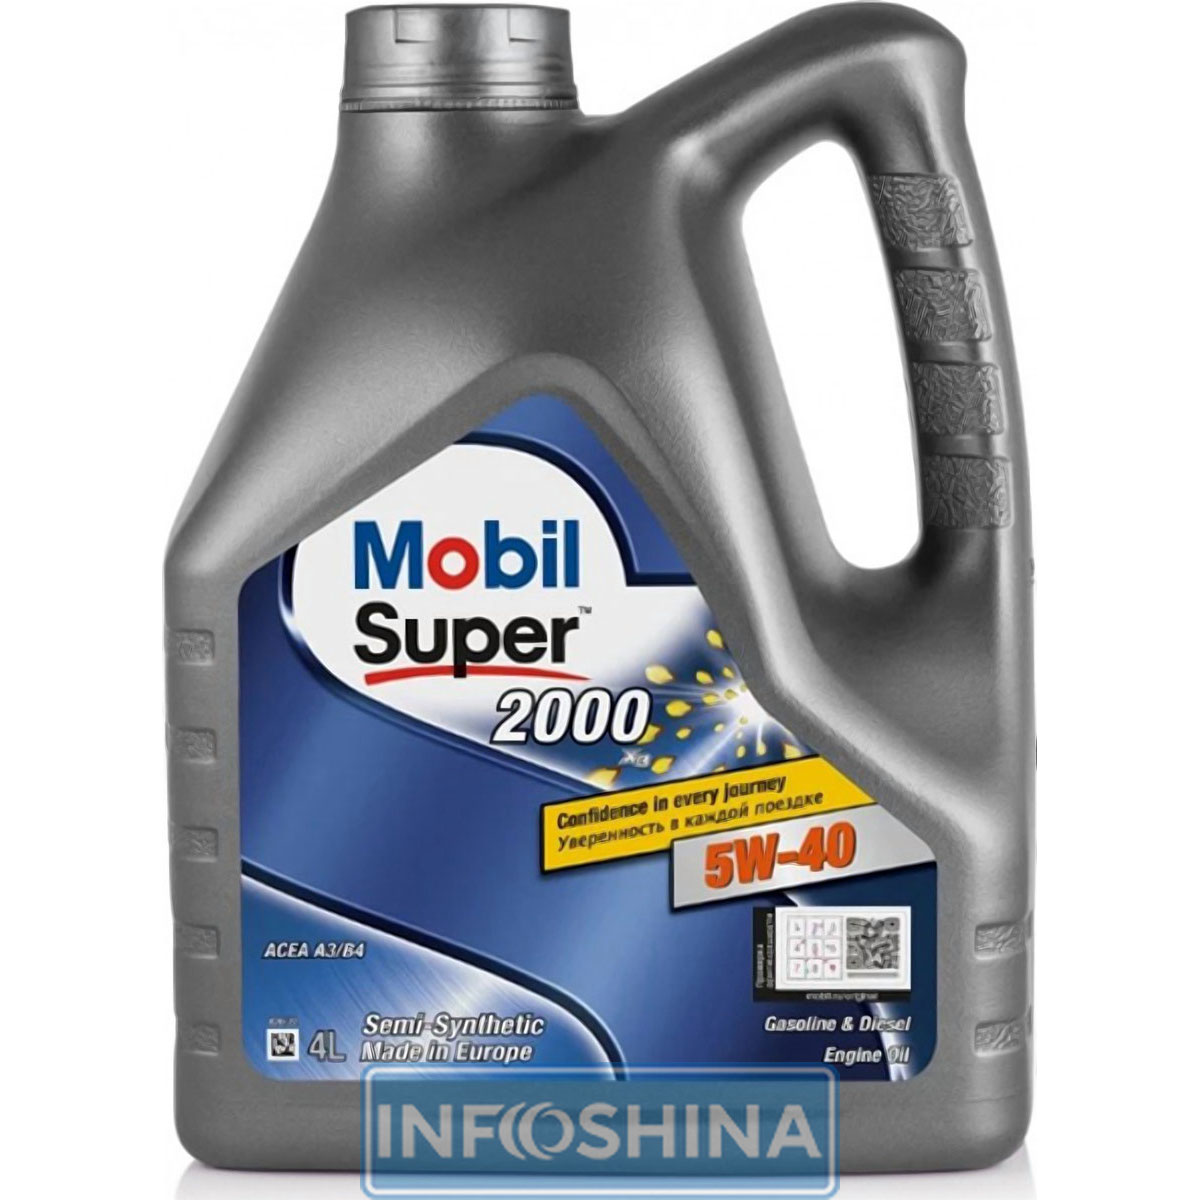 Купить масло Mobil Supe 2000 x3 5W-40 (4л)